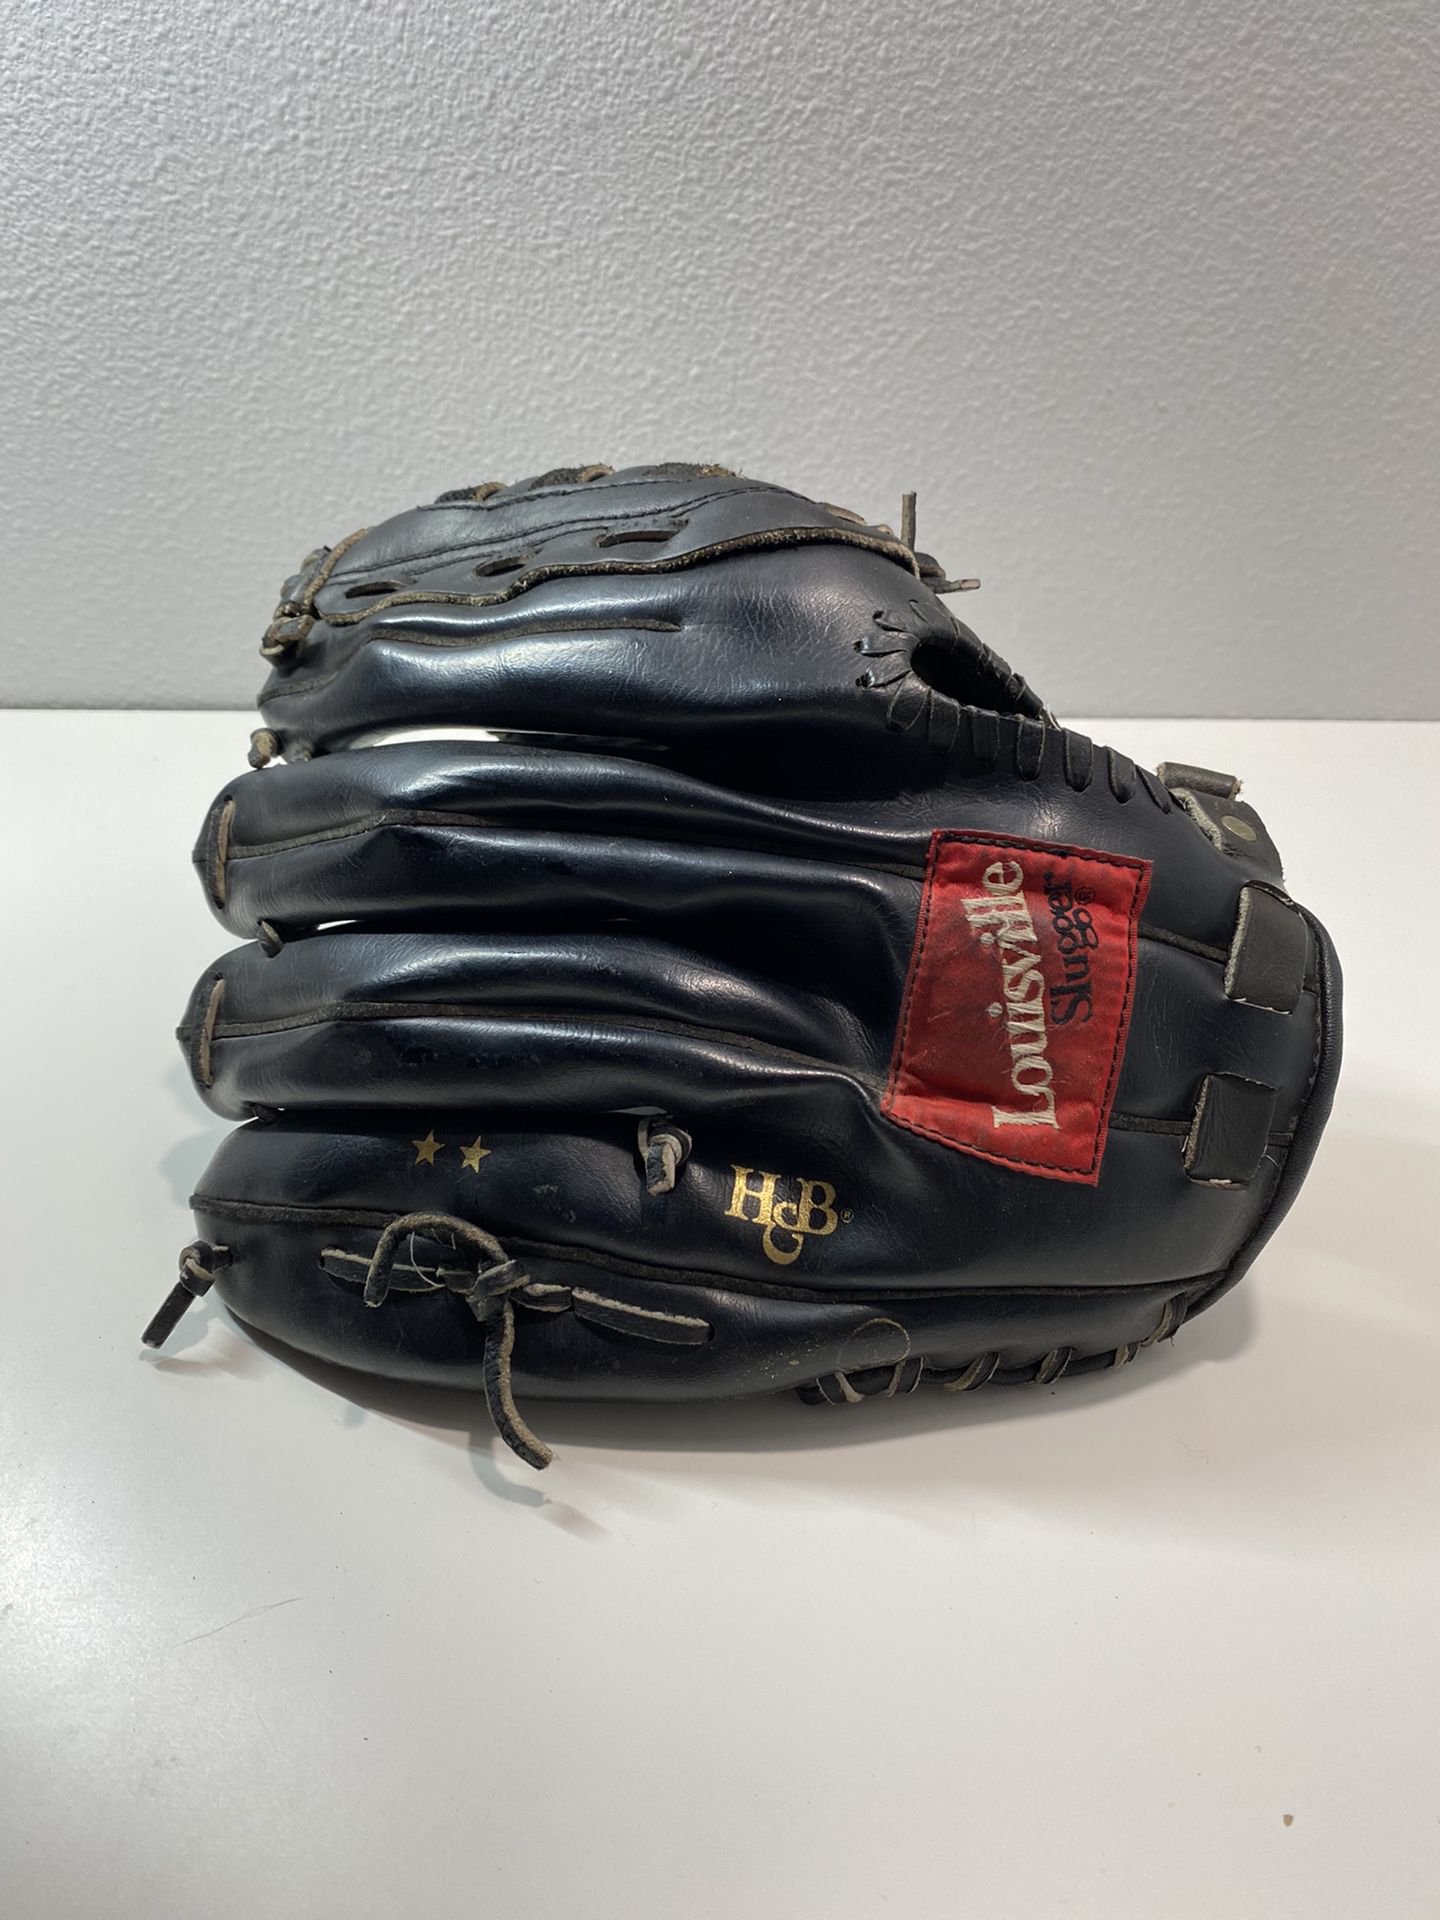 Louisville Slugger baseball glove LPS45VS 11" Throws Right